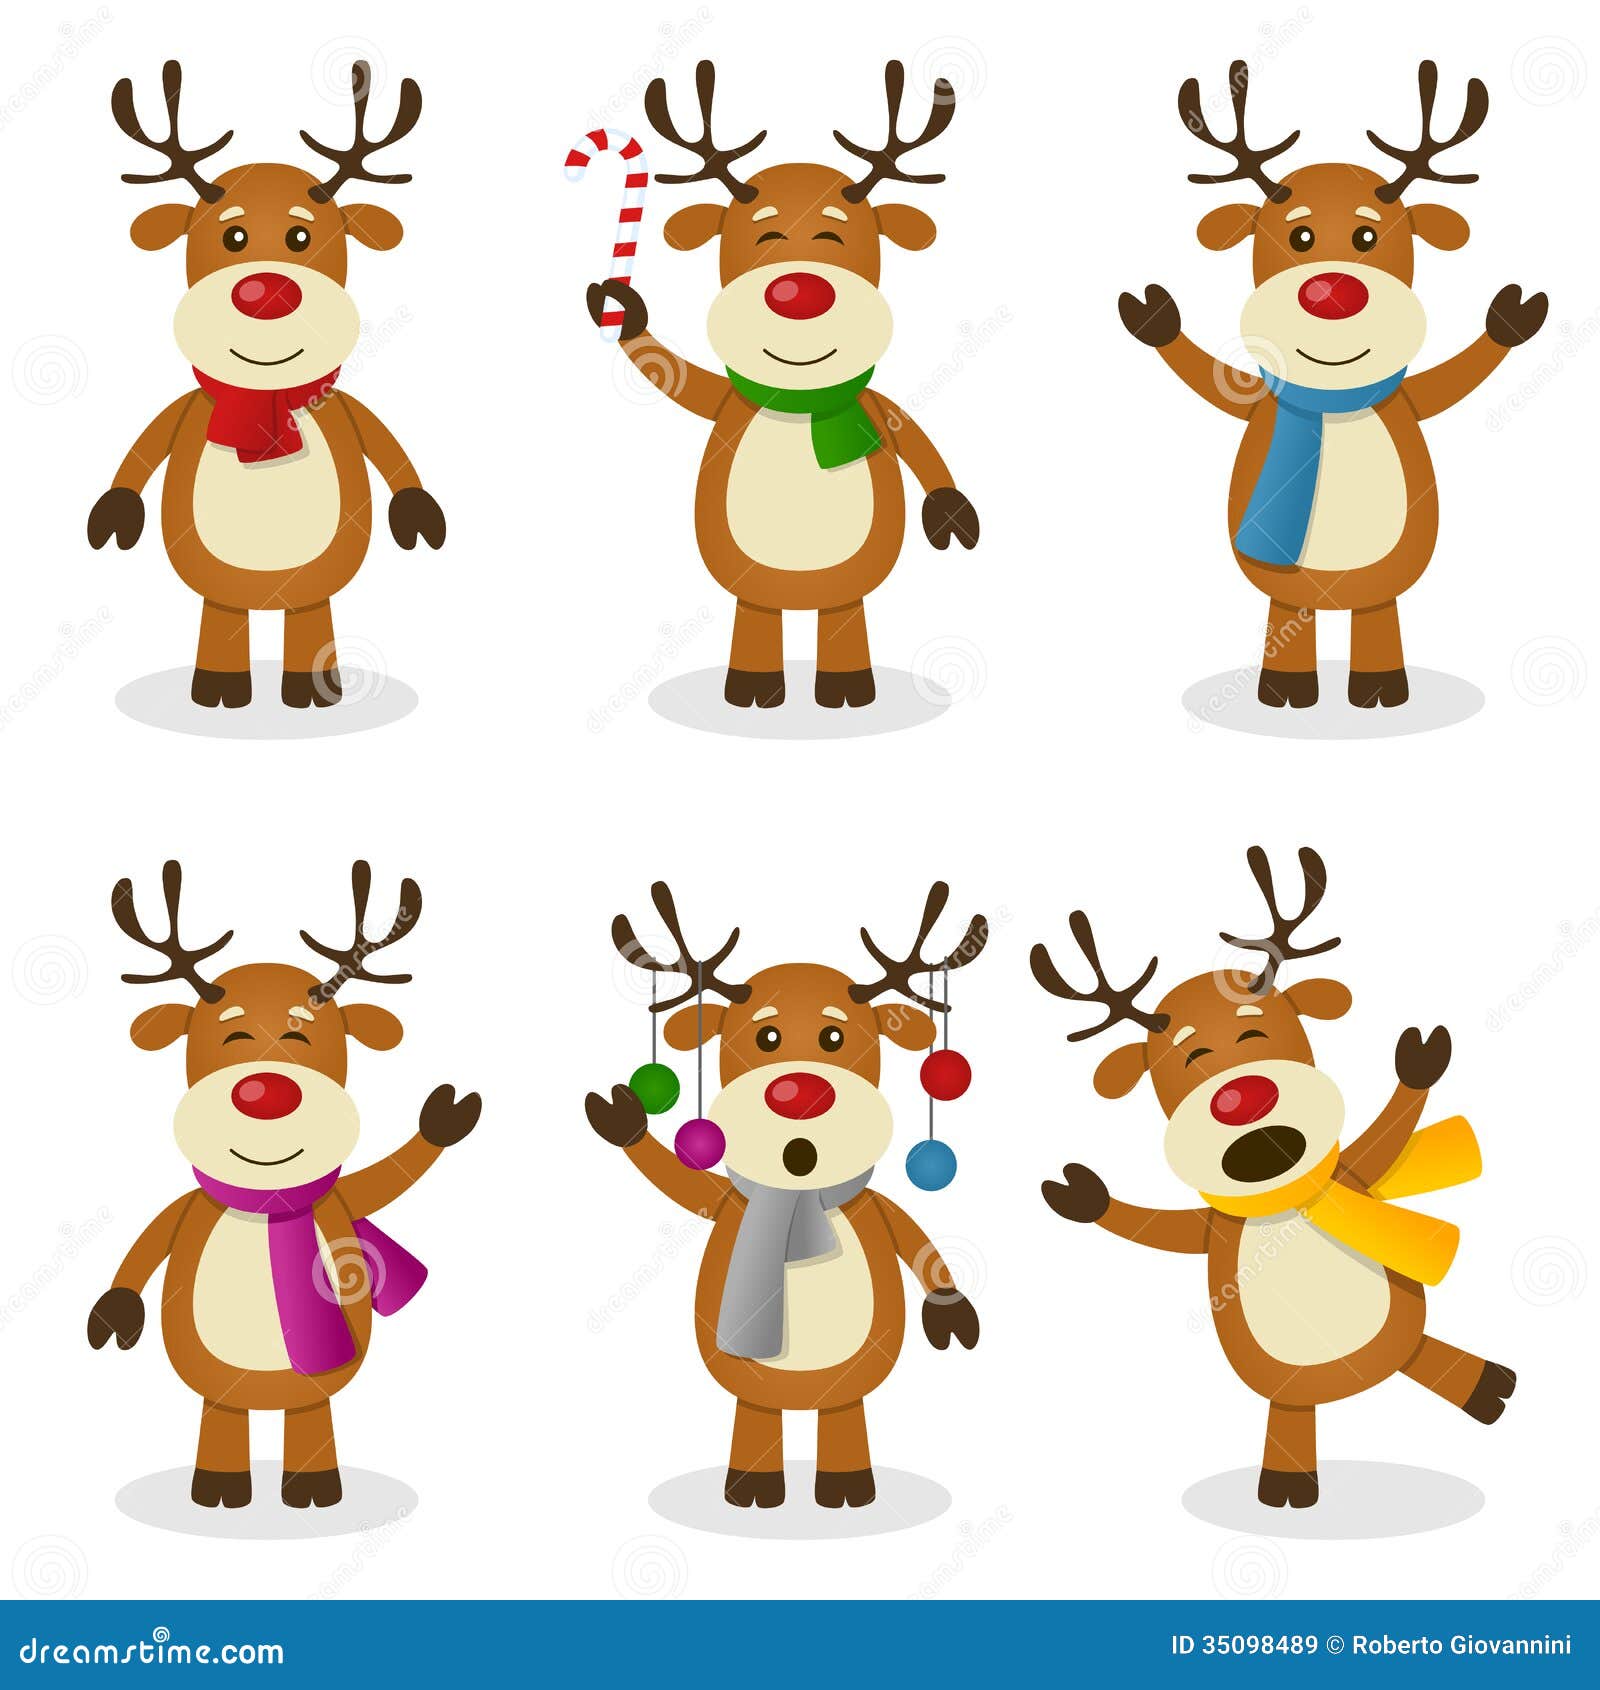 Reindeer Cartoon Christmas Set Royalty Free Stock Images - Image: 35098489